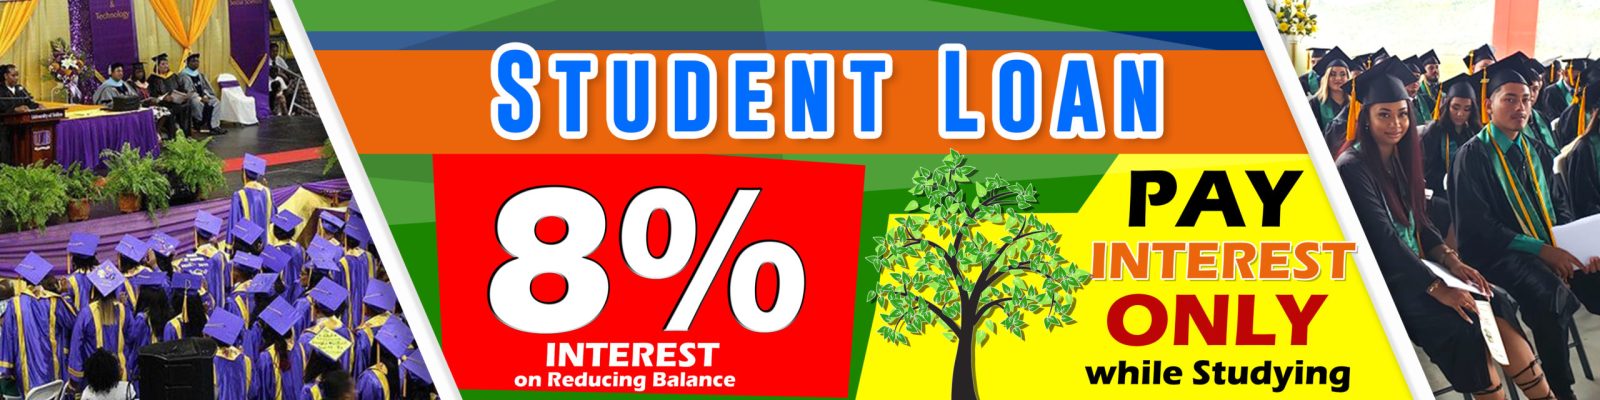 Student loan banner